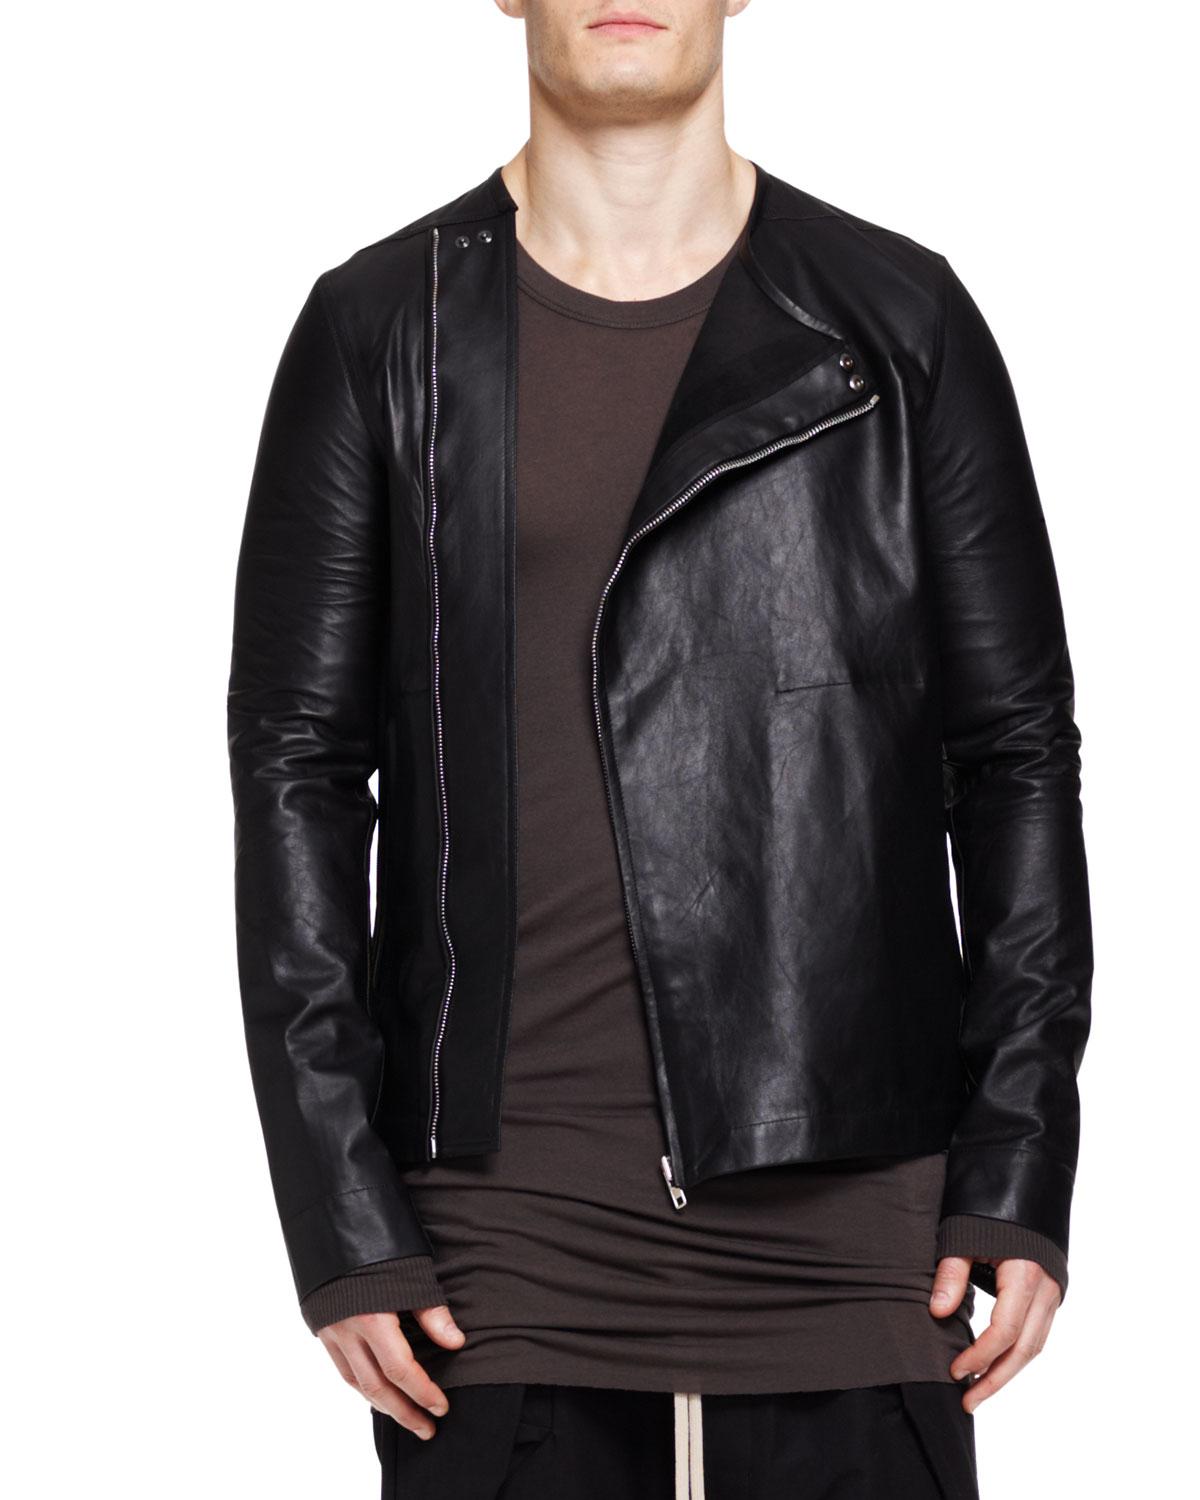 Lyst - Rick owens Asymmetric-Zip Leather Jacket in Black for Men